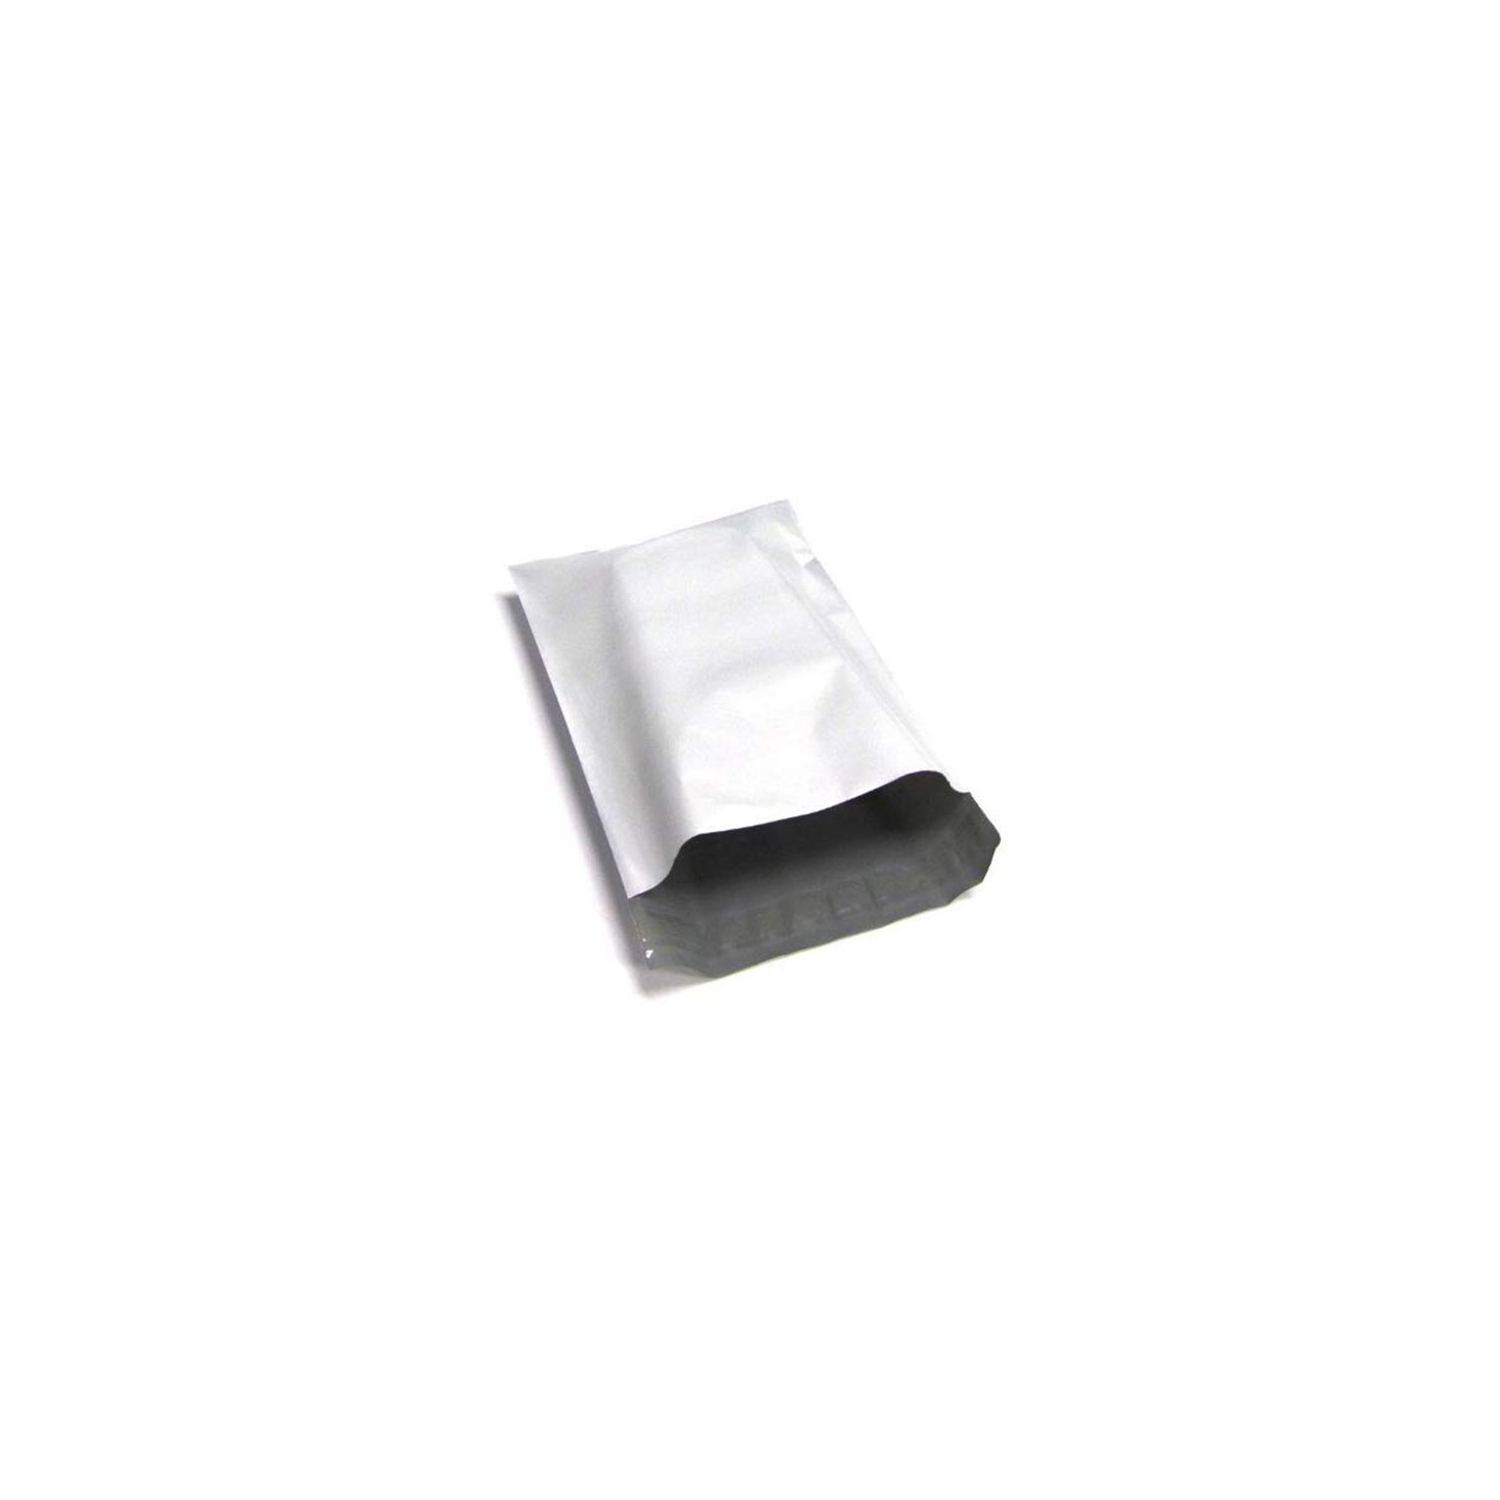 iMBA-2PM-100 iMBAPrice 100-7.5x10.5 Premium Matte Finish Self-Sealing Non-Padded White Poly Mailers/Mailing Envelopes/Bags